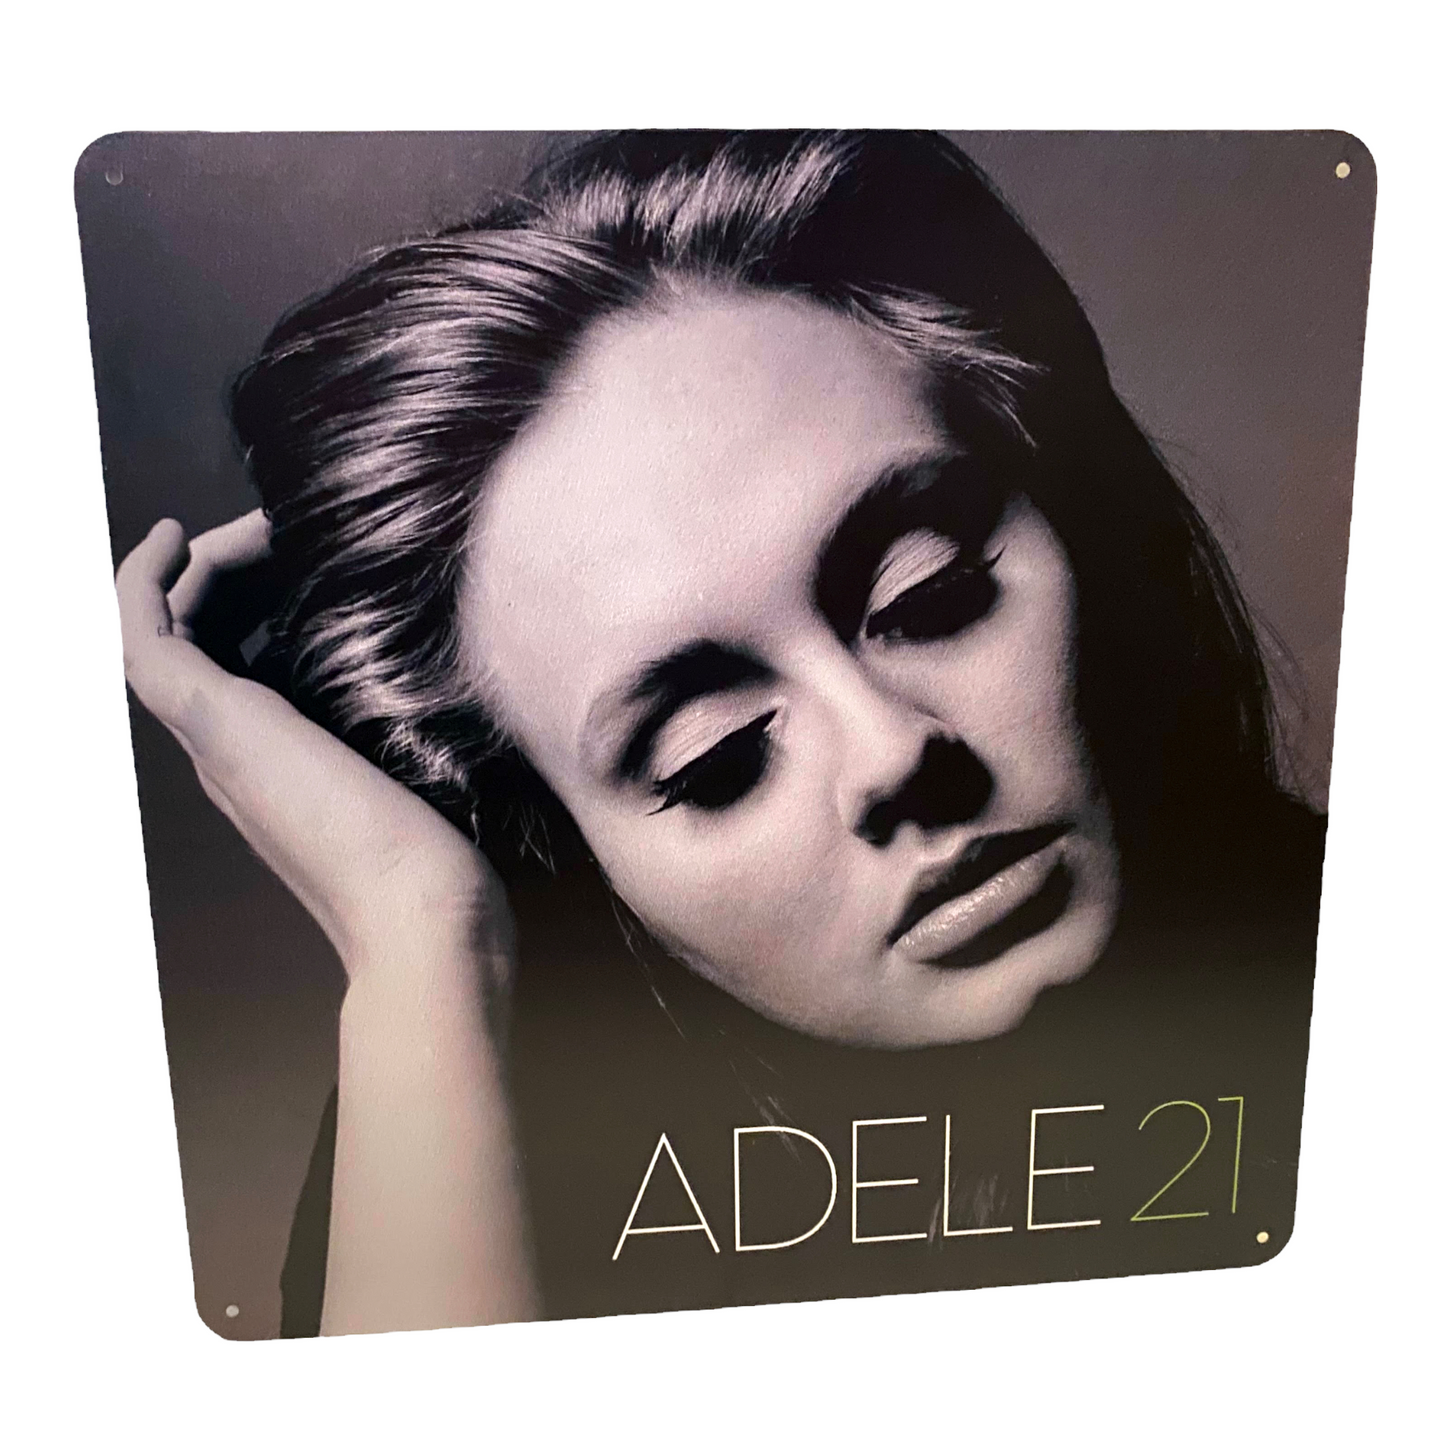 Adele 21 Album Cover Metal Print Tin Sign 12"x 12"